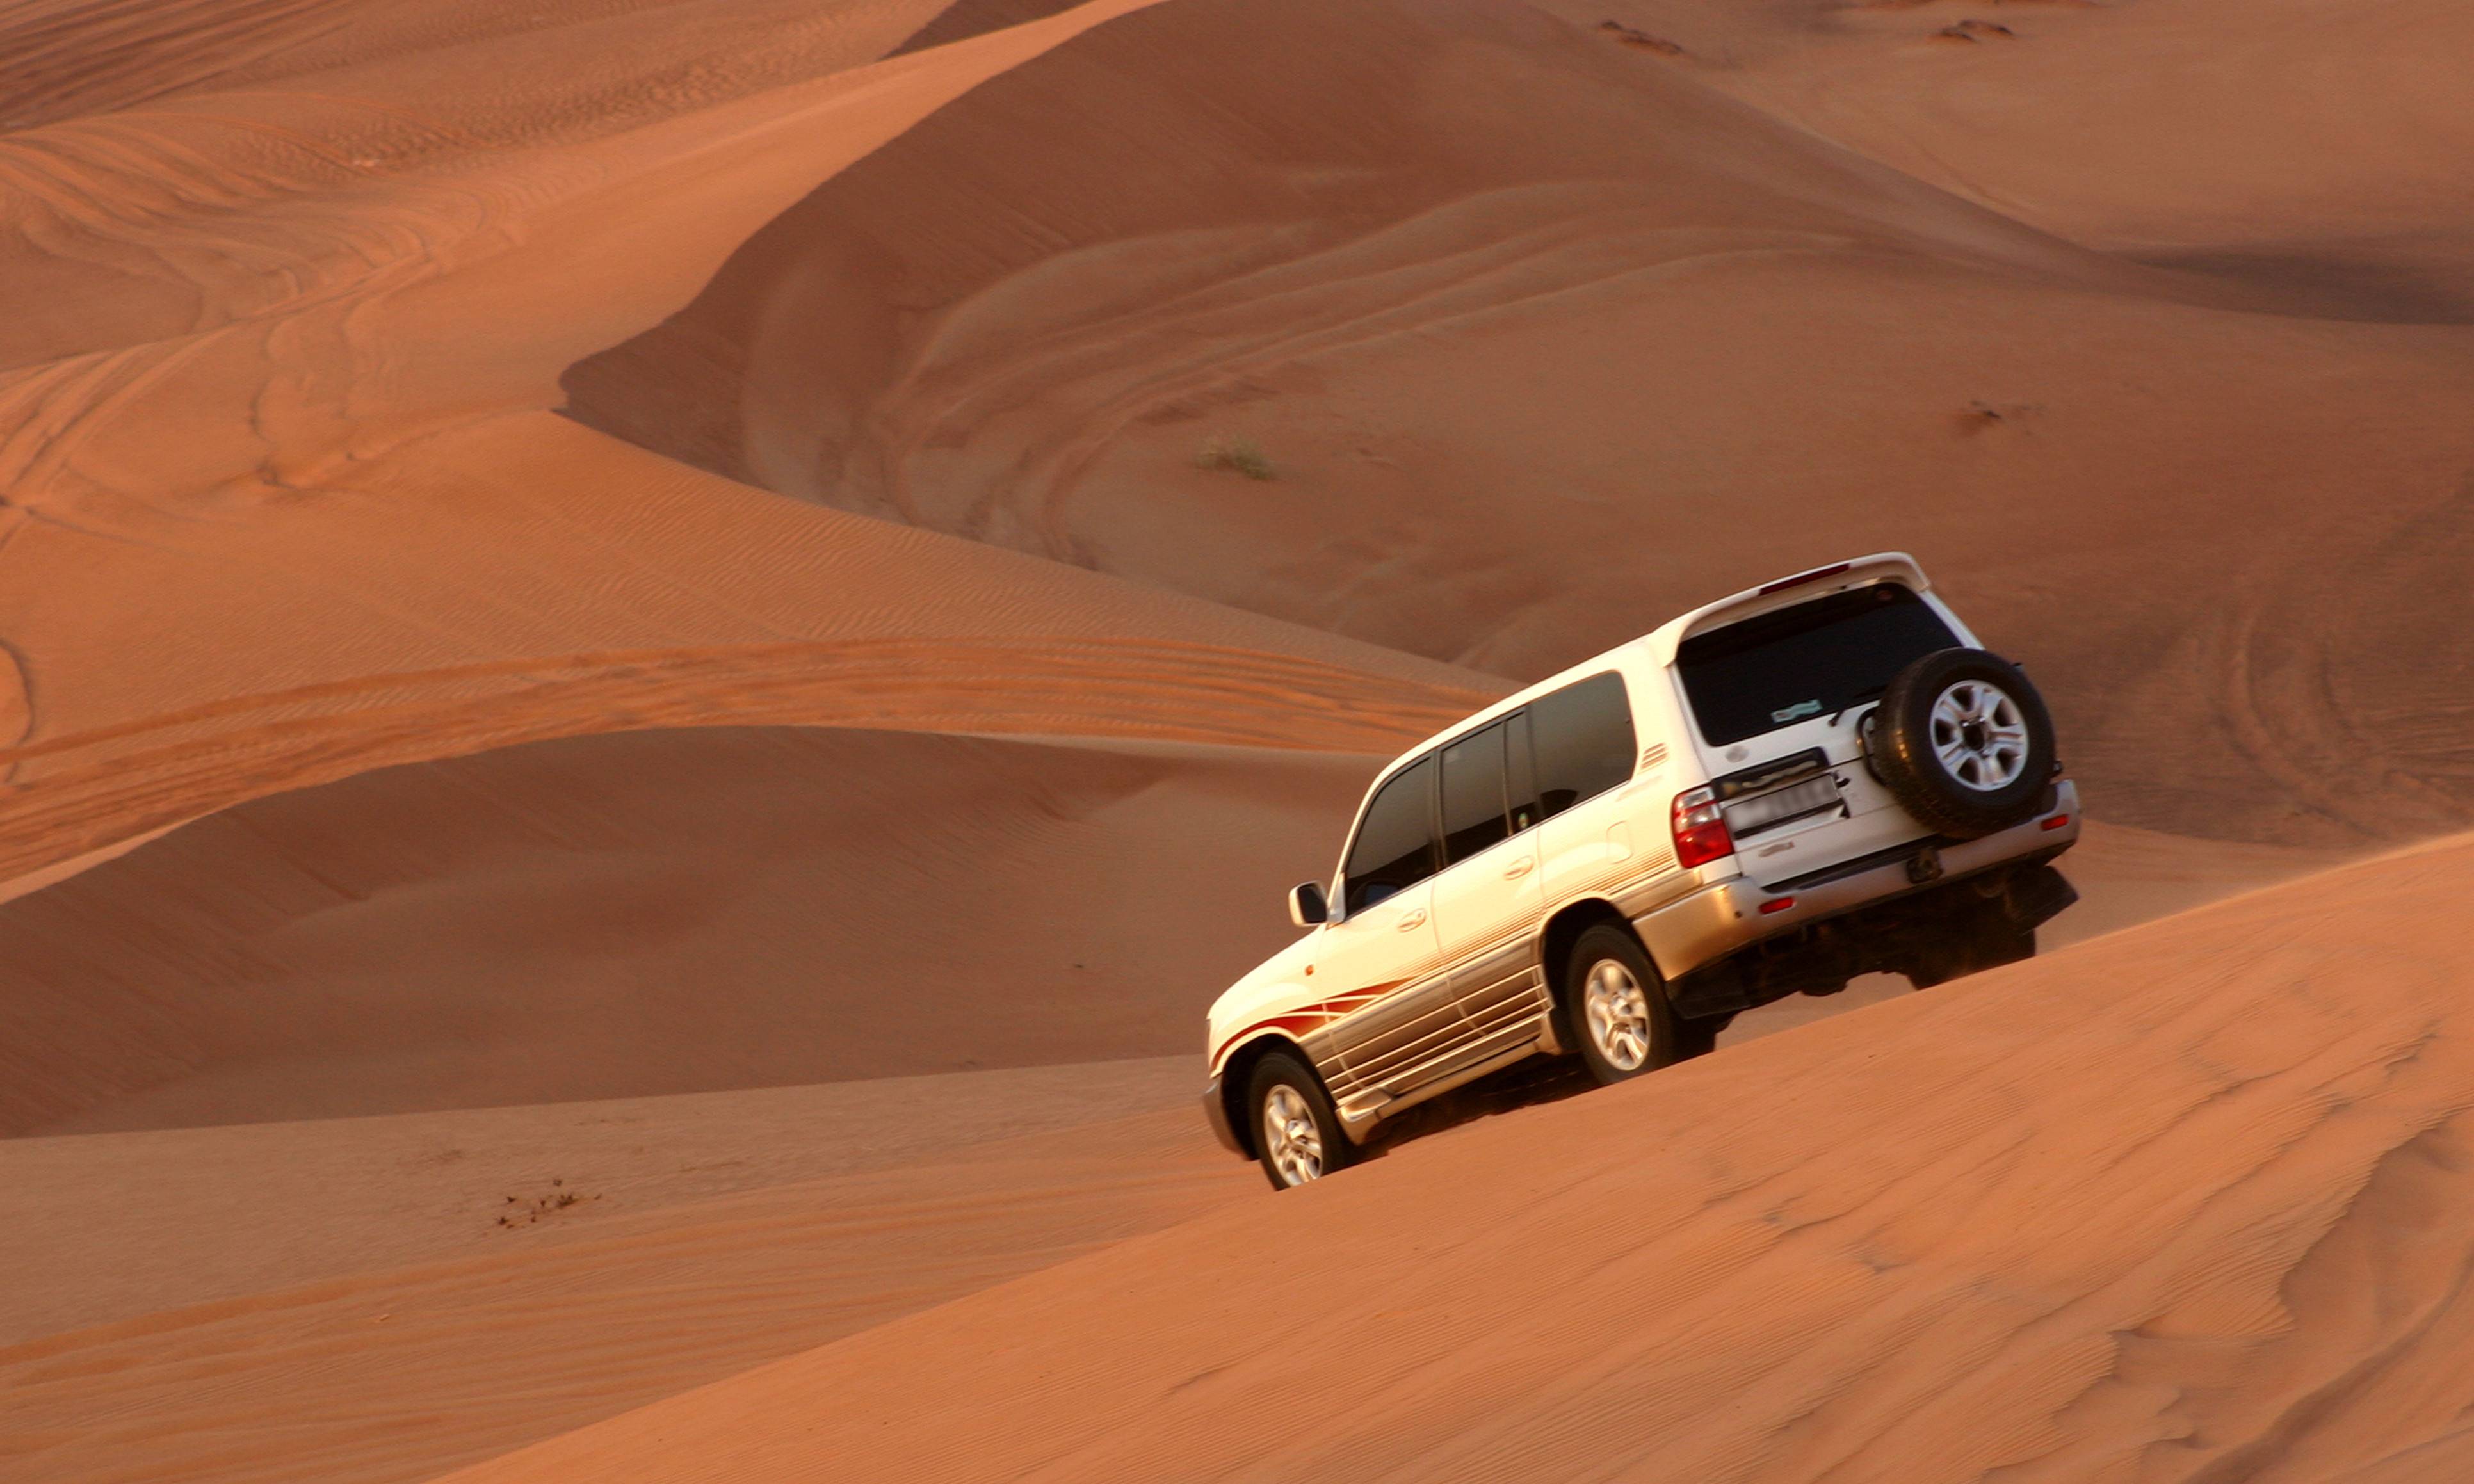 Desert Jeepsafari Dubai